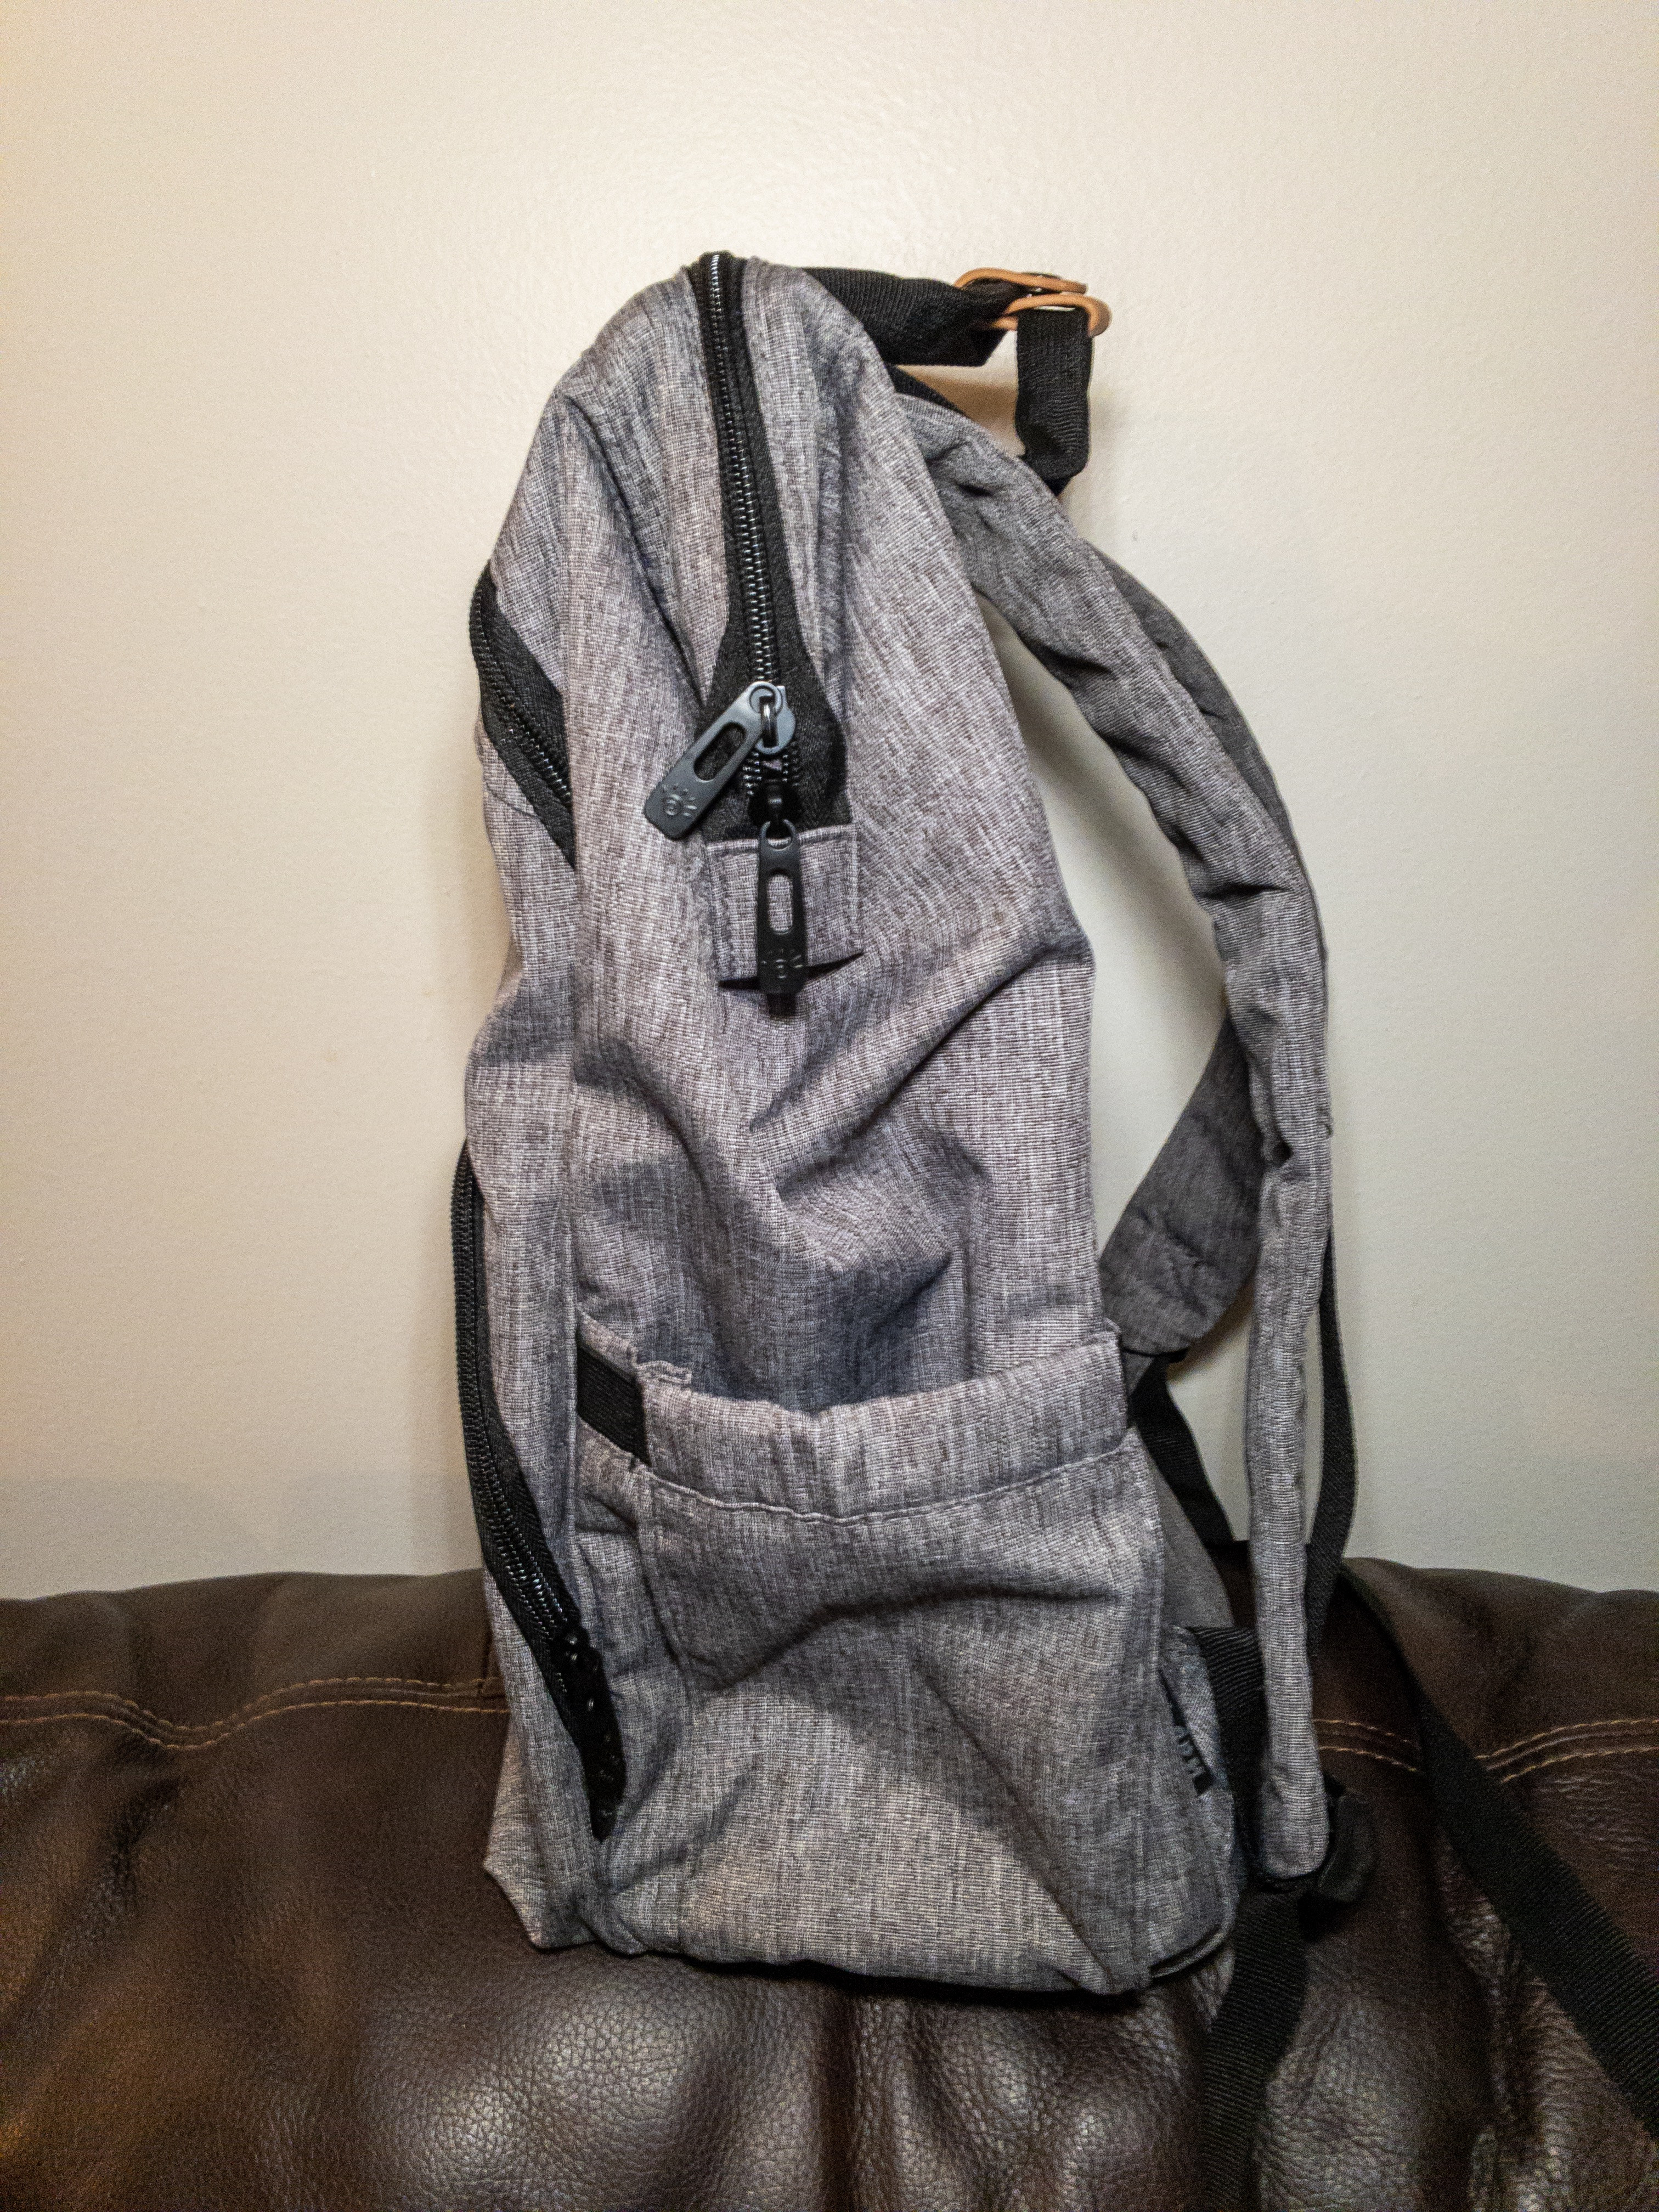 hap-tim-laptop-backpack-review-2.JPG